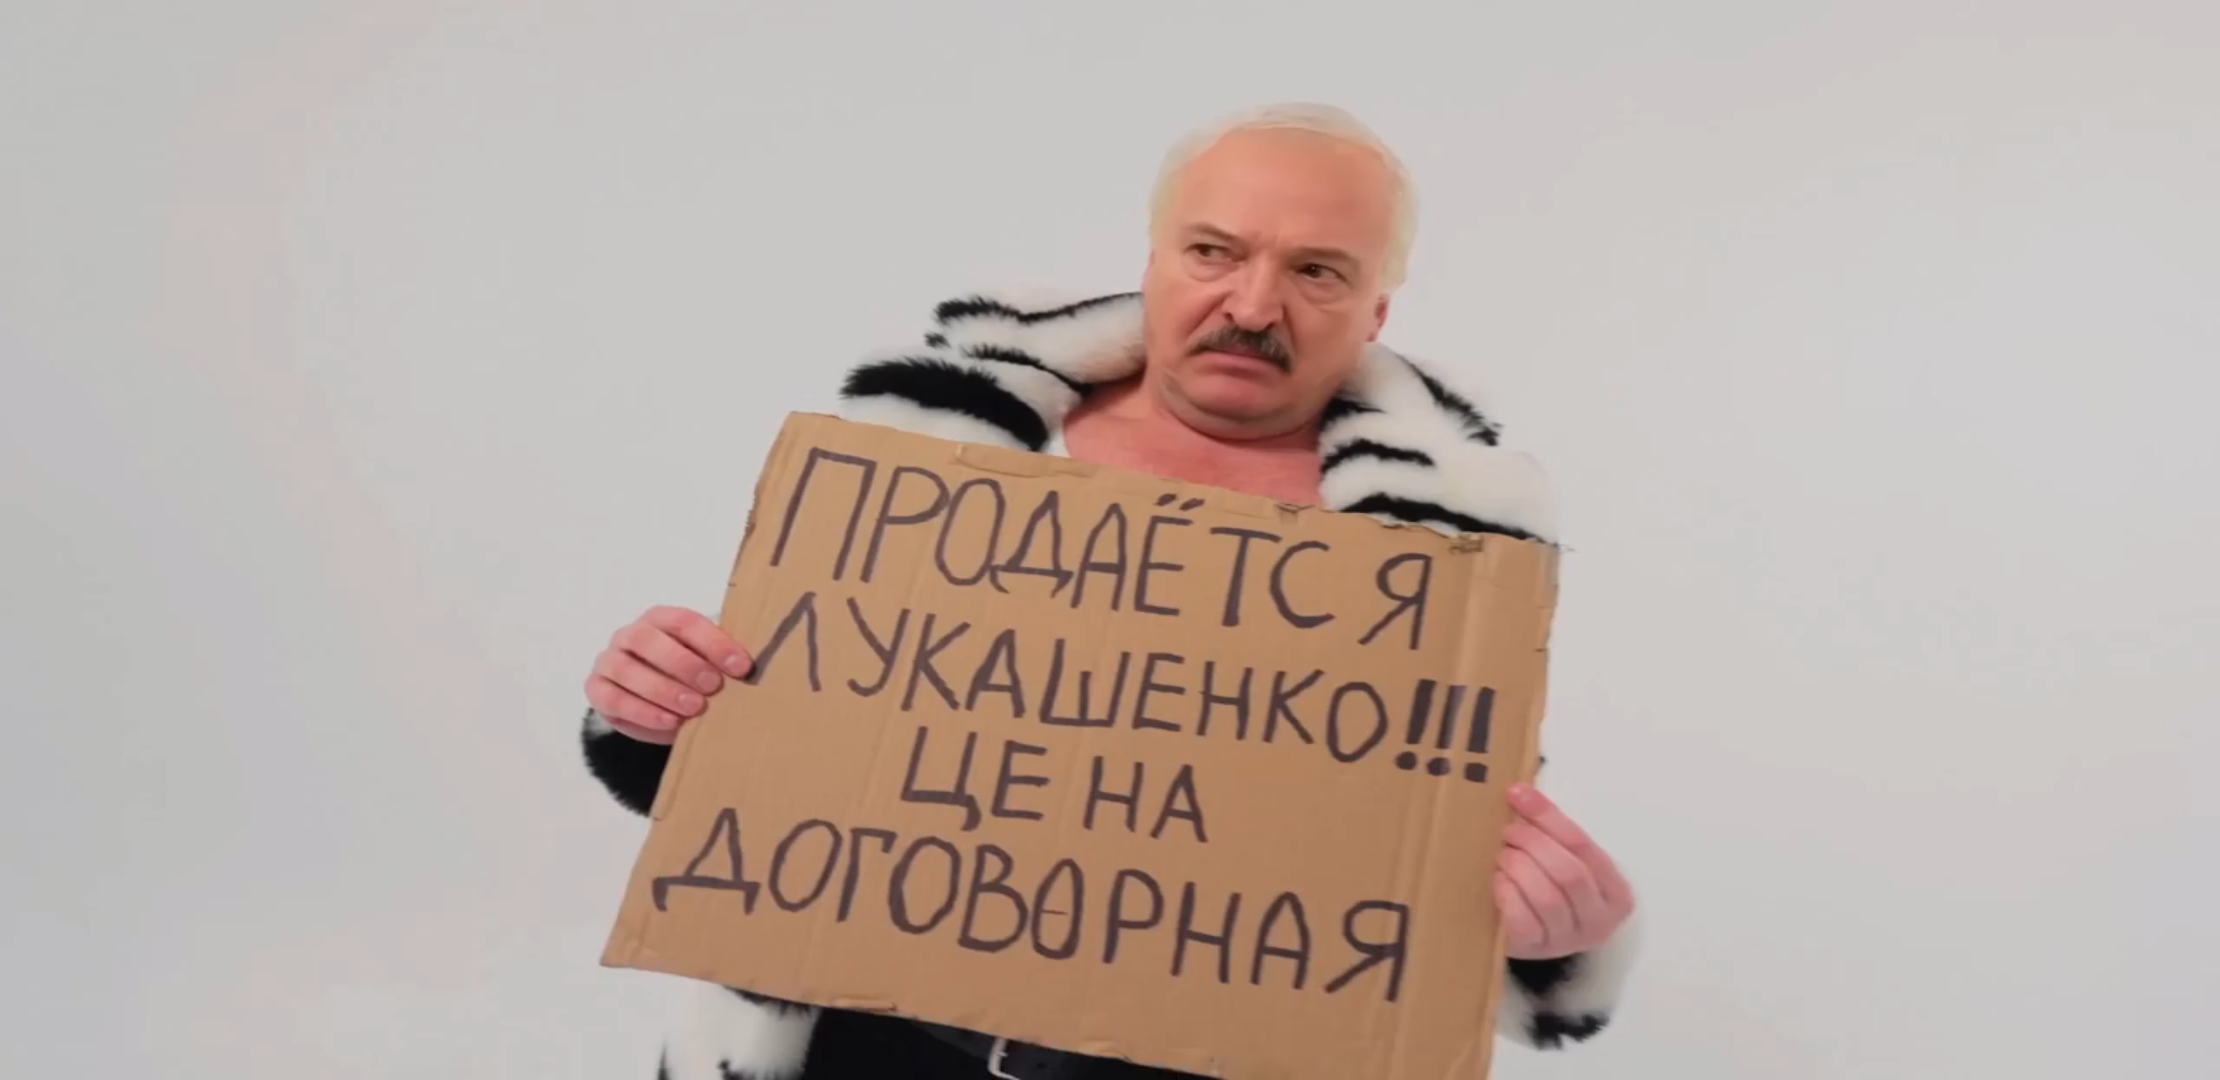 ИнстаСашка Лукашенко – ЗА ДЕНЬГИ ДА (пародия)